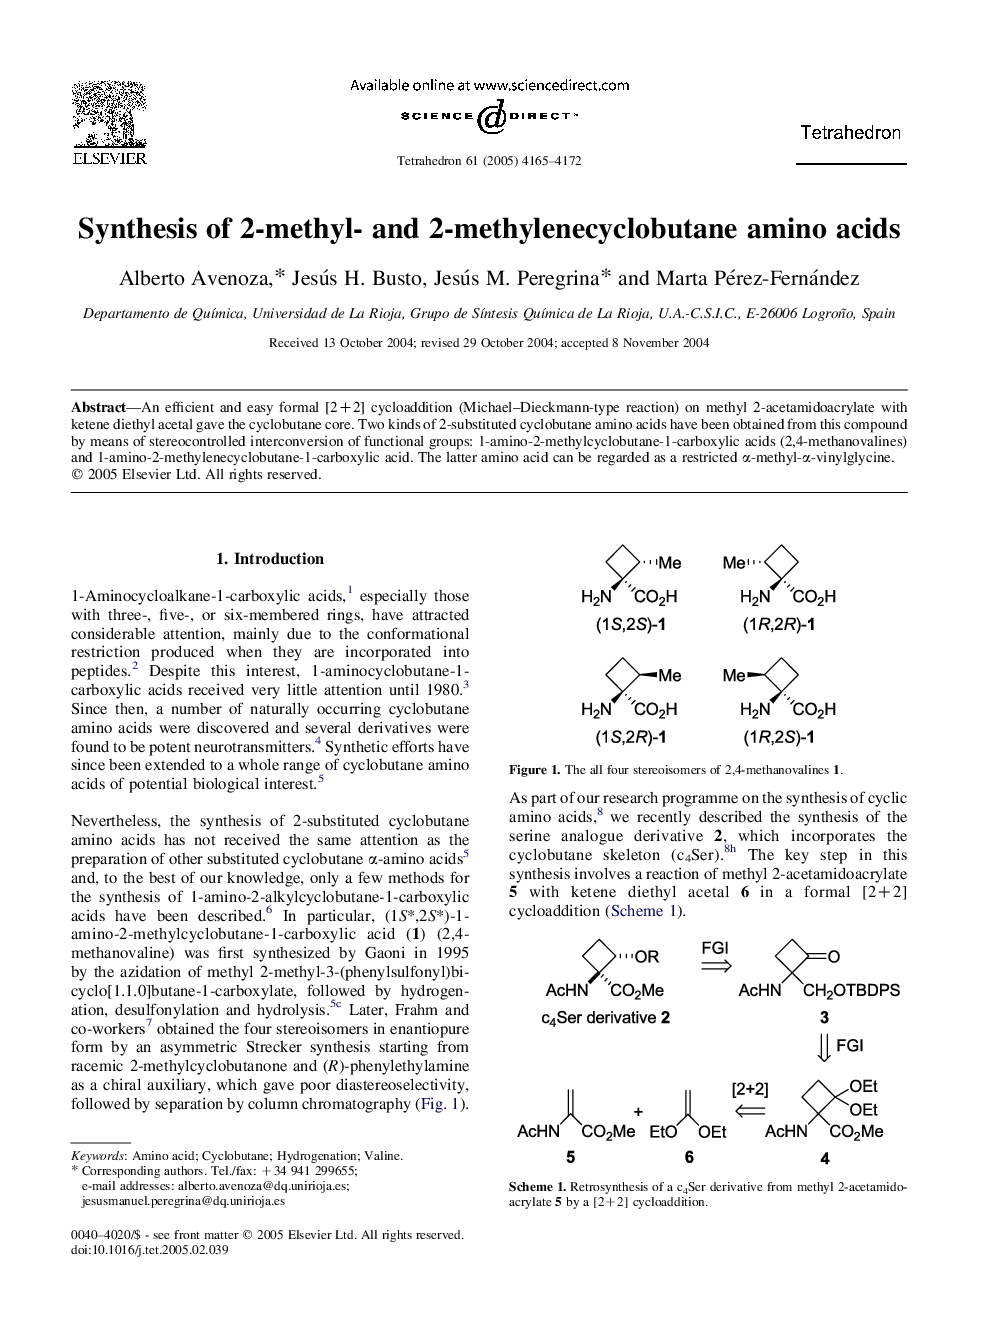 Synthesis of 2-methyl- and 2-methylenecyclobutane amino acids